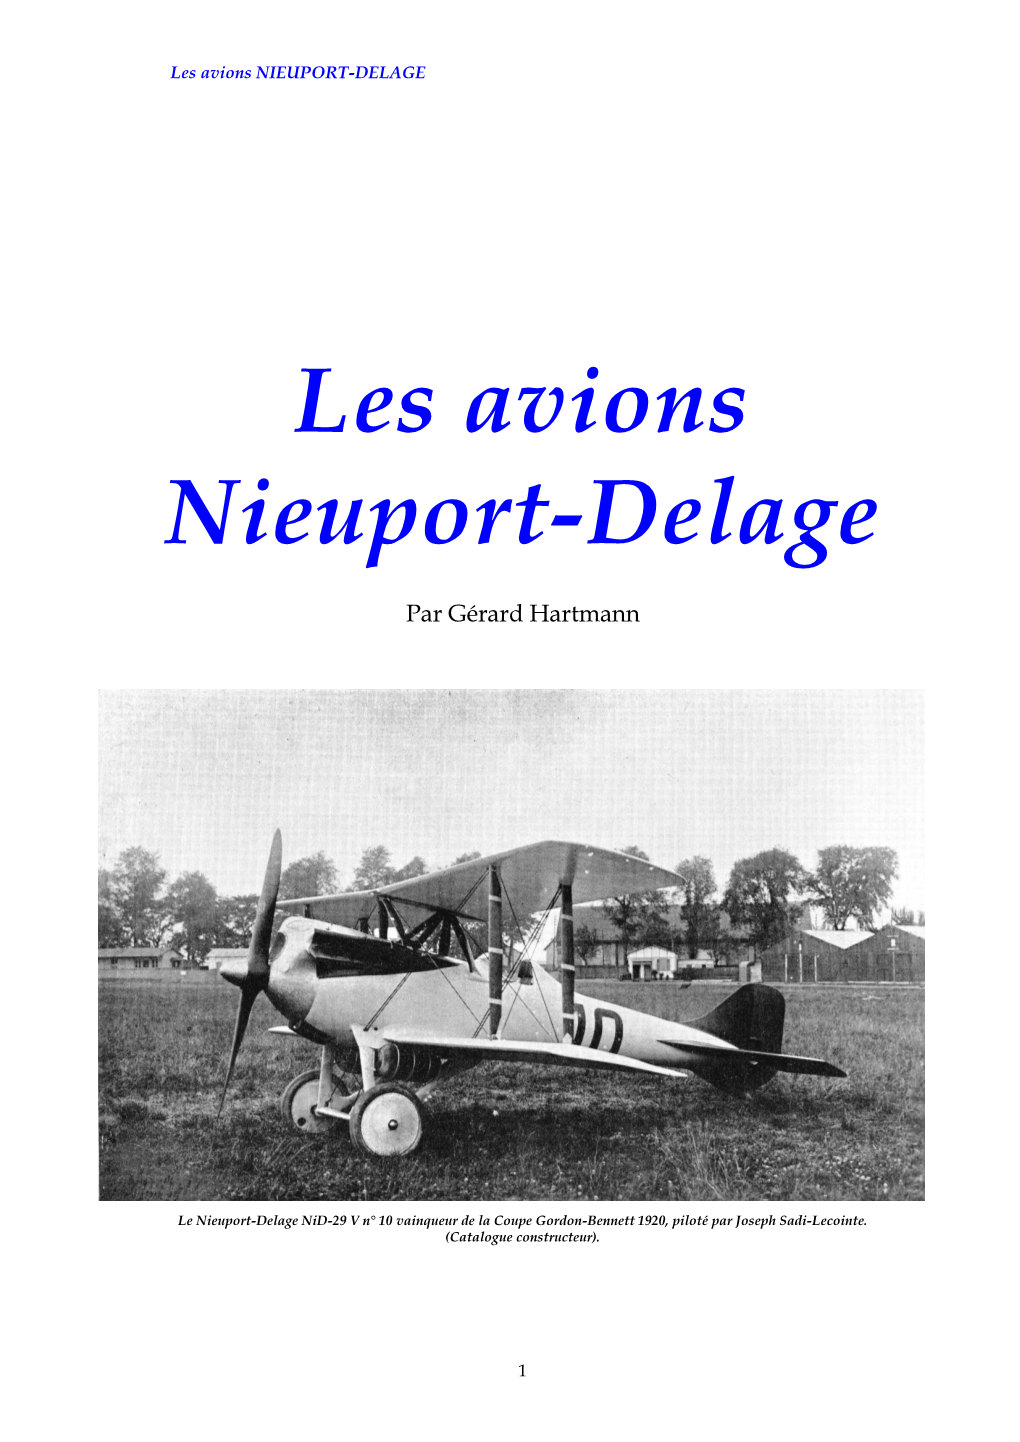 Les Avions NIEUPORT-DELAGE